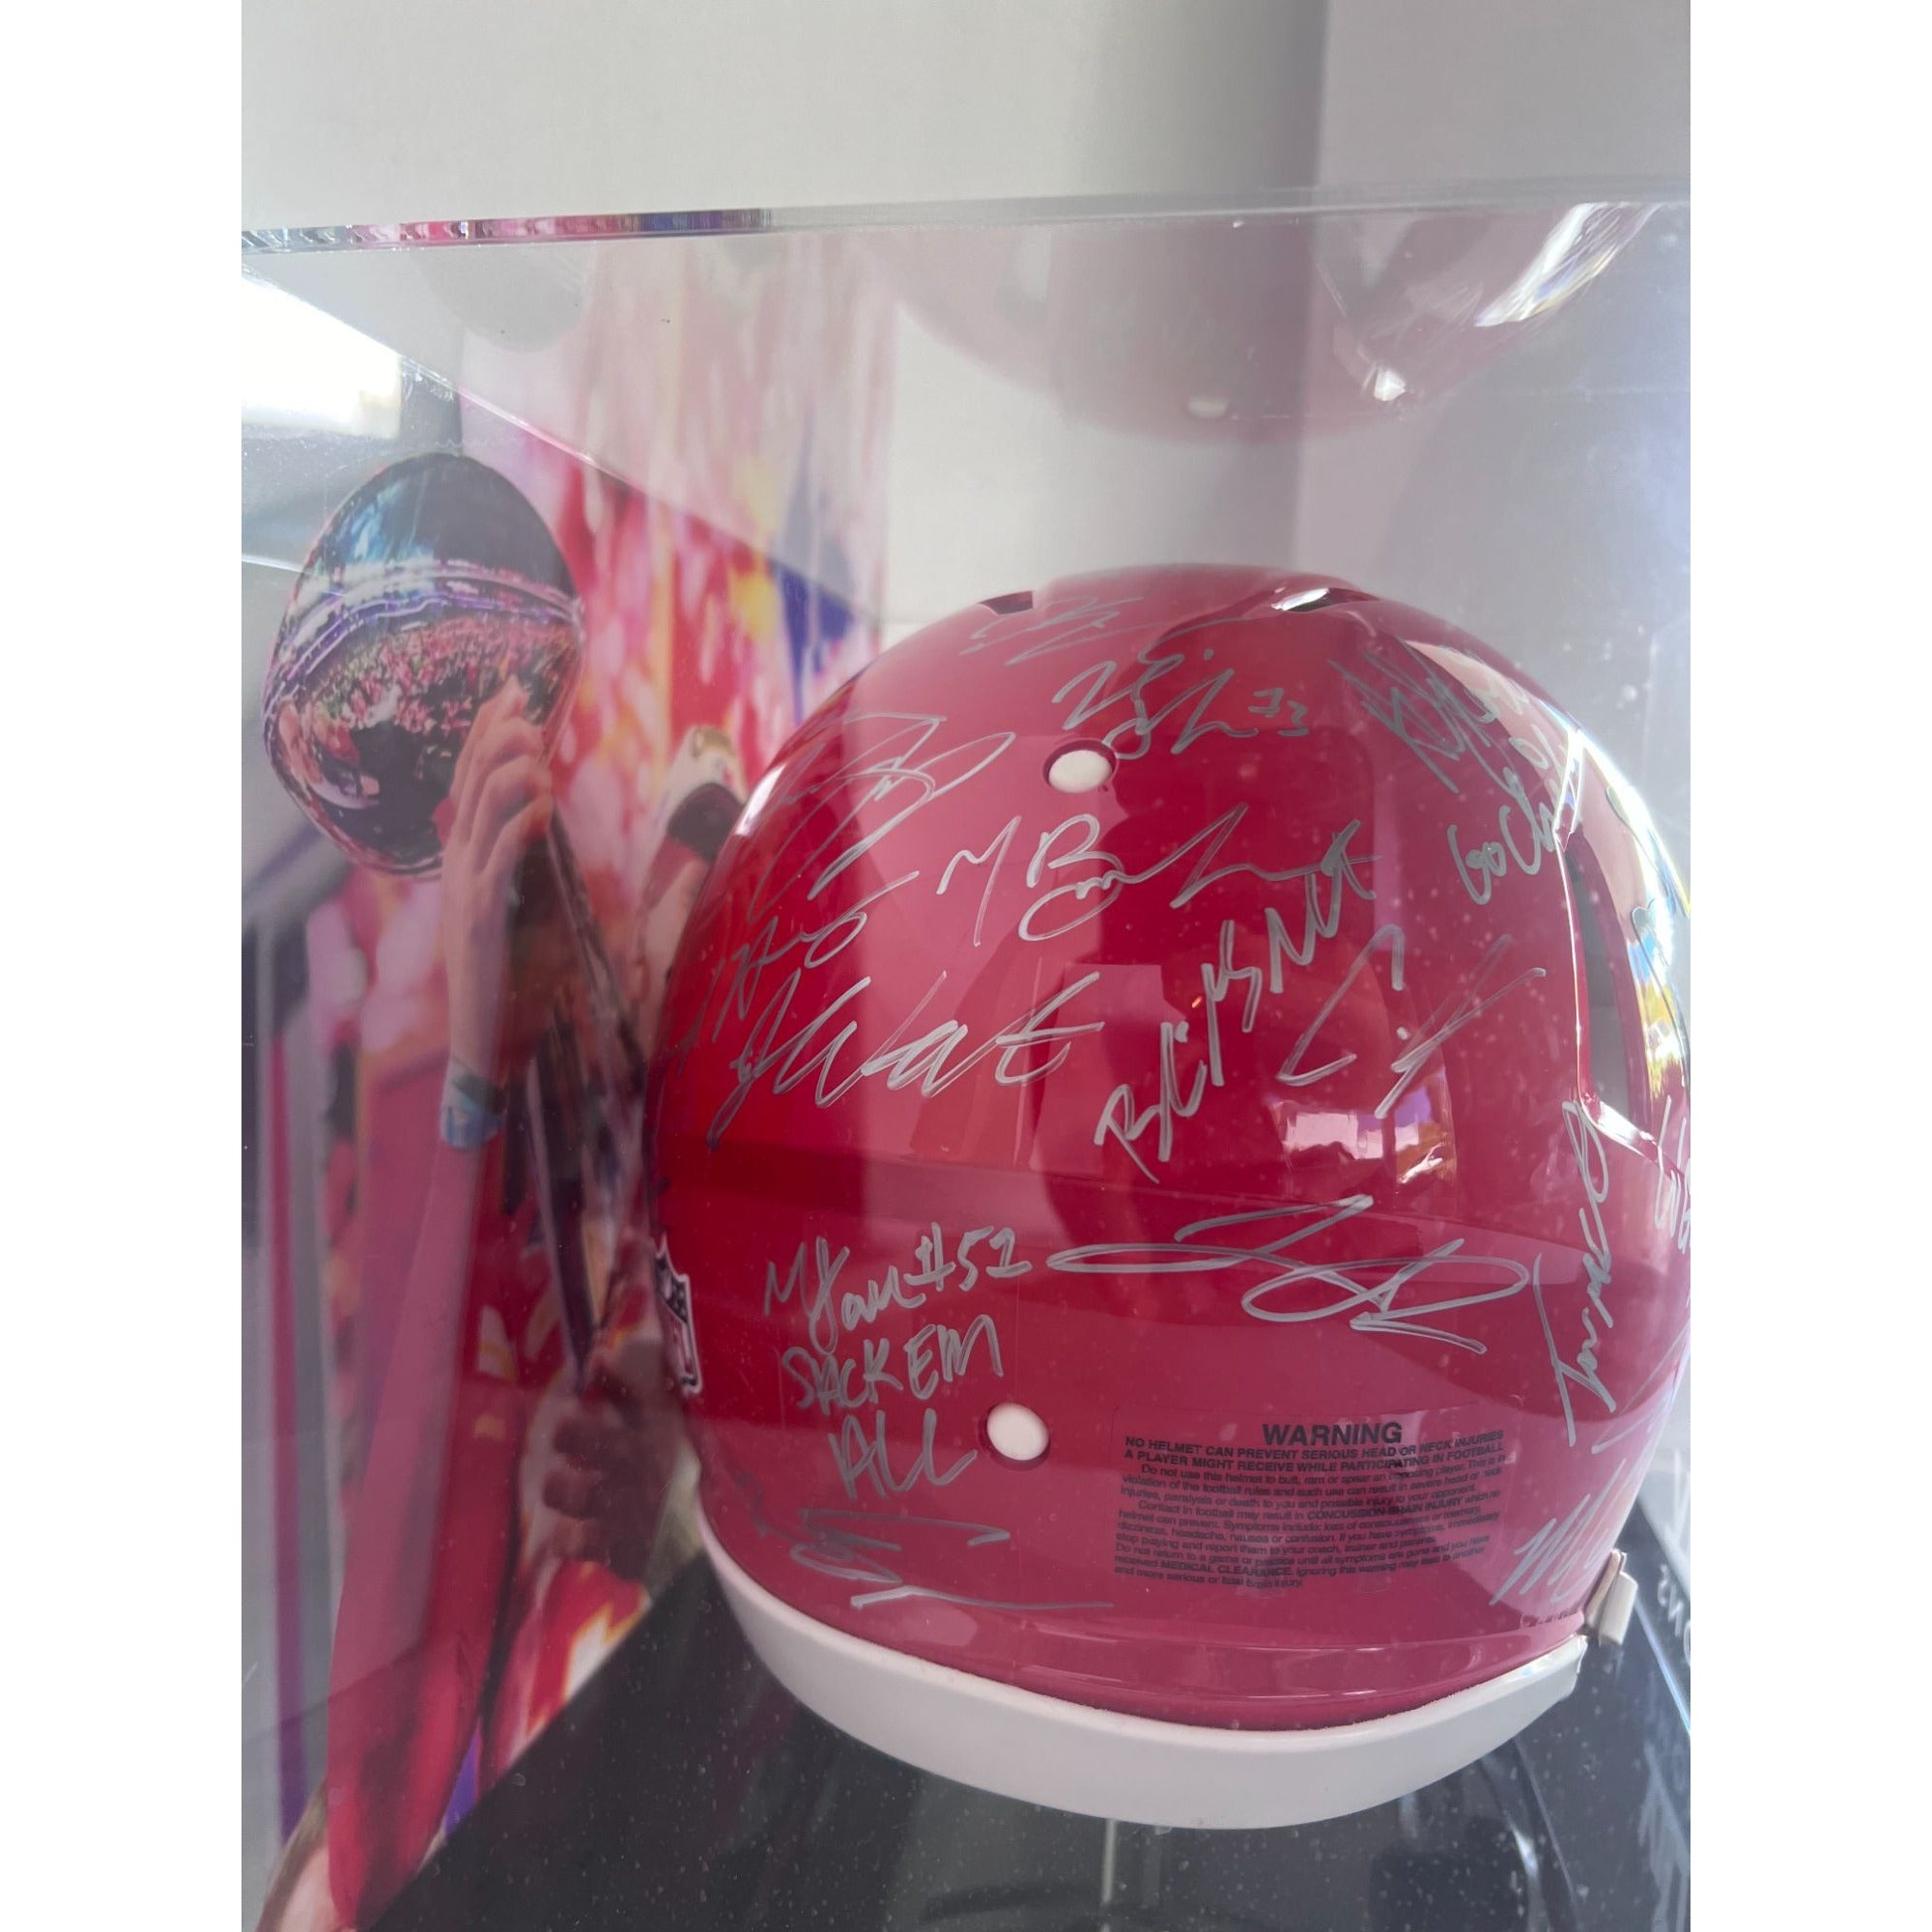 Kansas City Super Bowl champions Patrick Mahomes Andy Reid Travis Kelce 2022 23 team signed helmet with proofand 15x13 acrylic display case